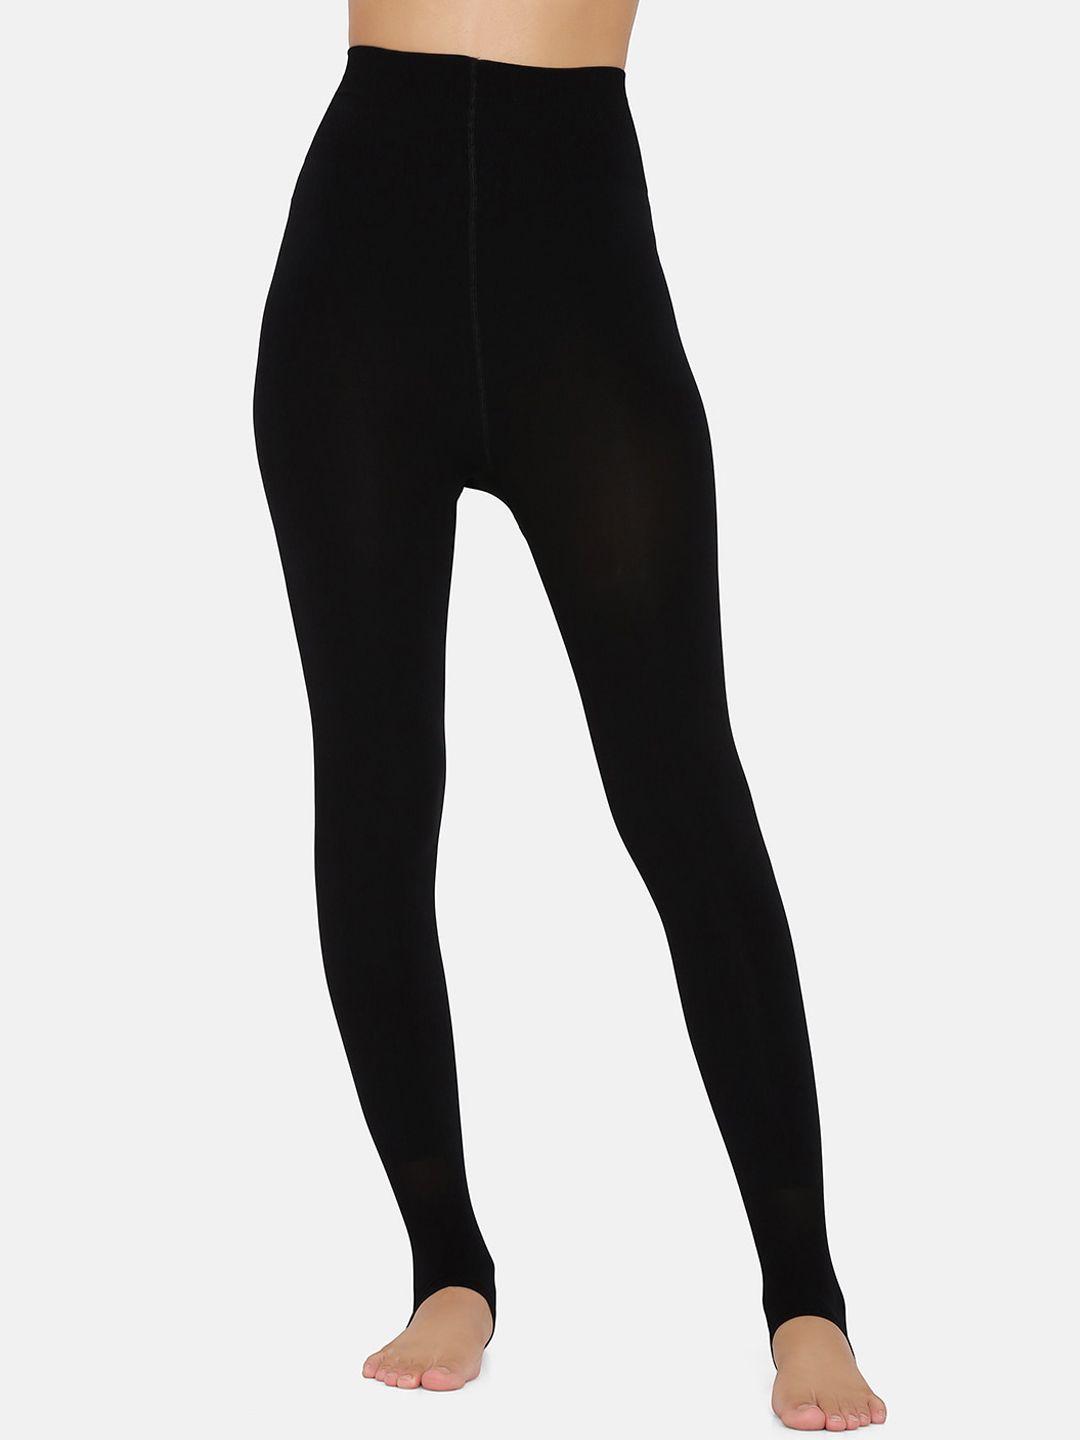 da intimo women black solid shapewear integrated stockings